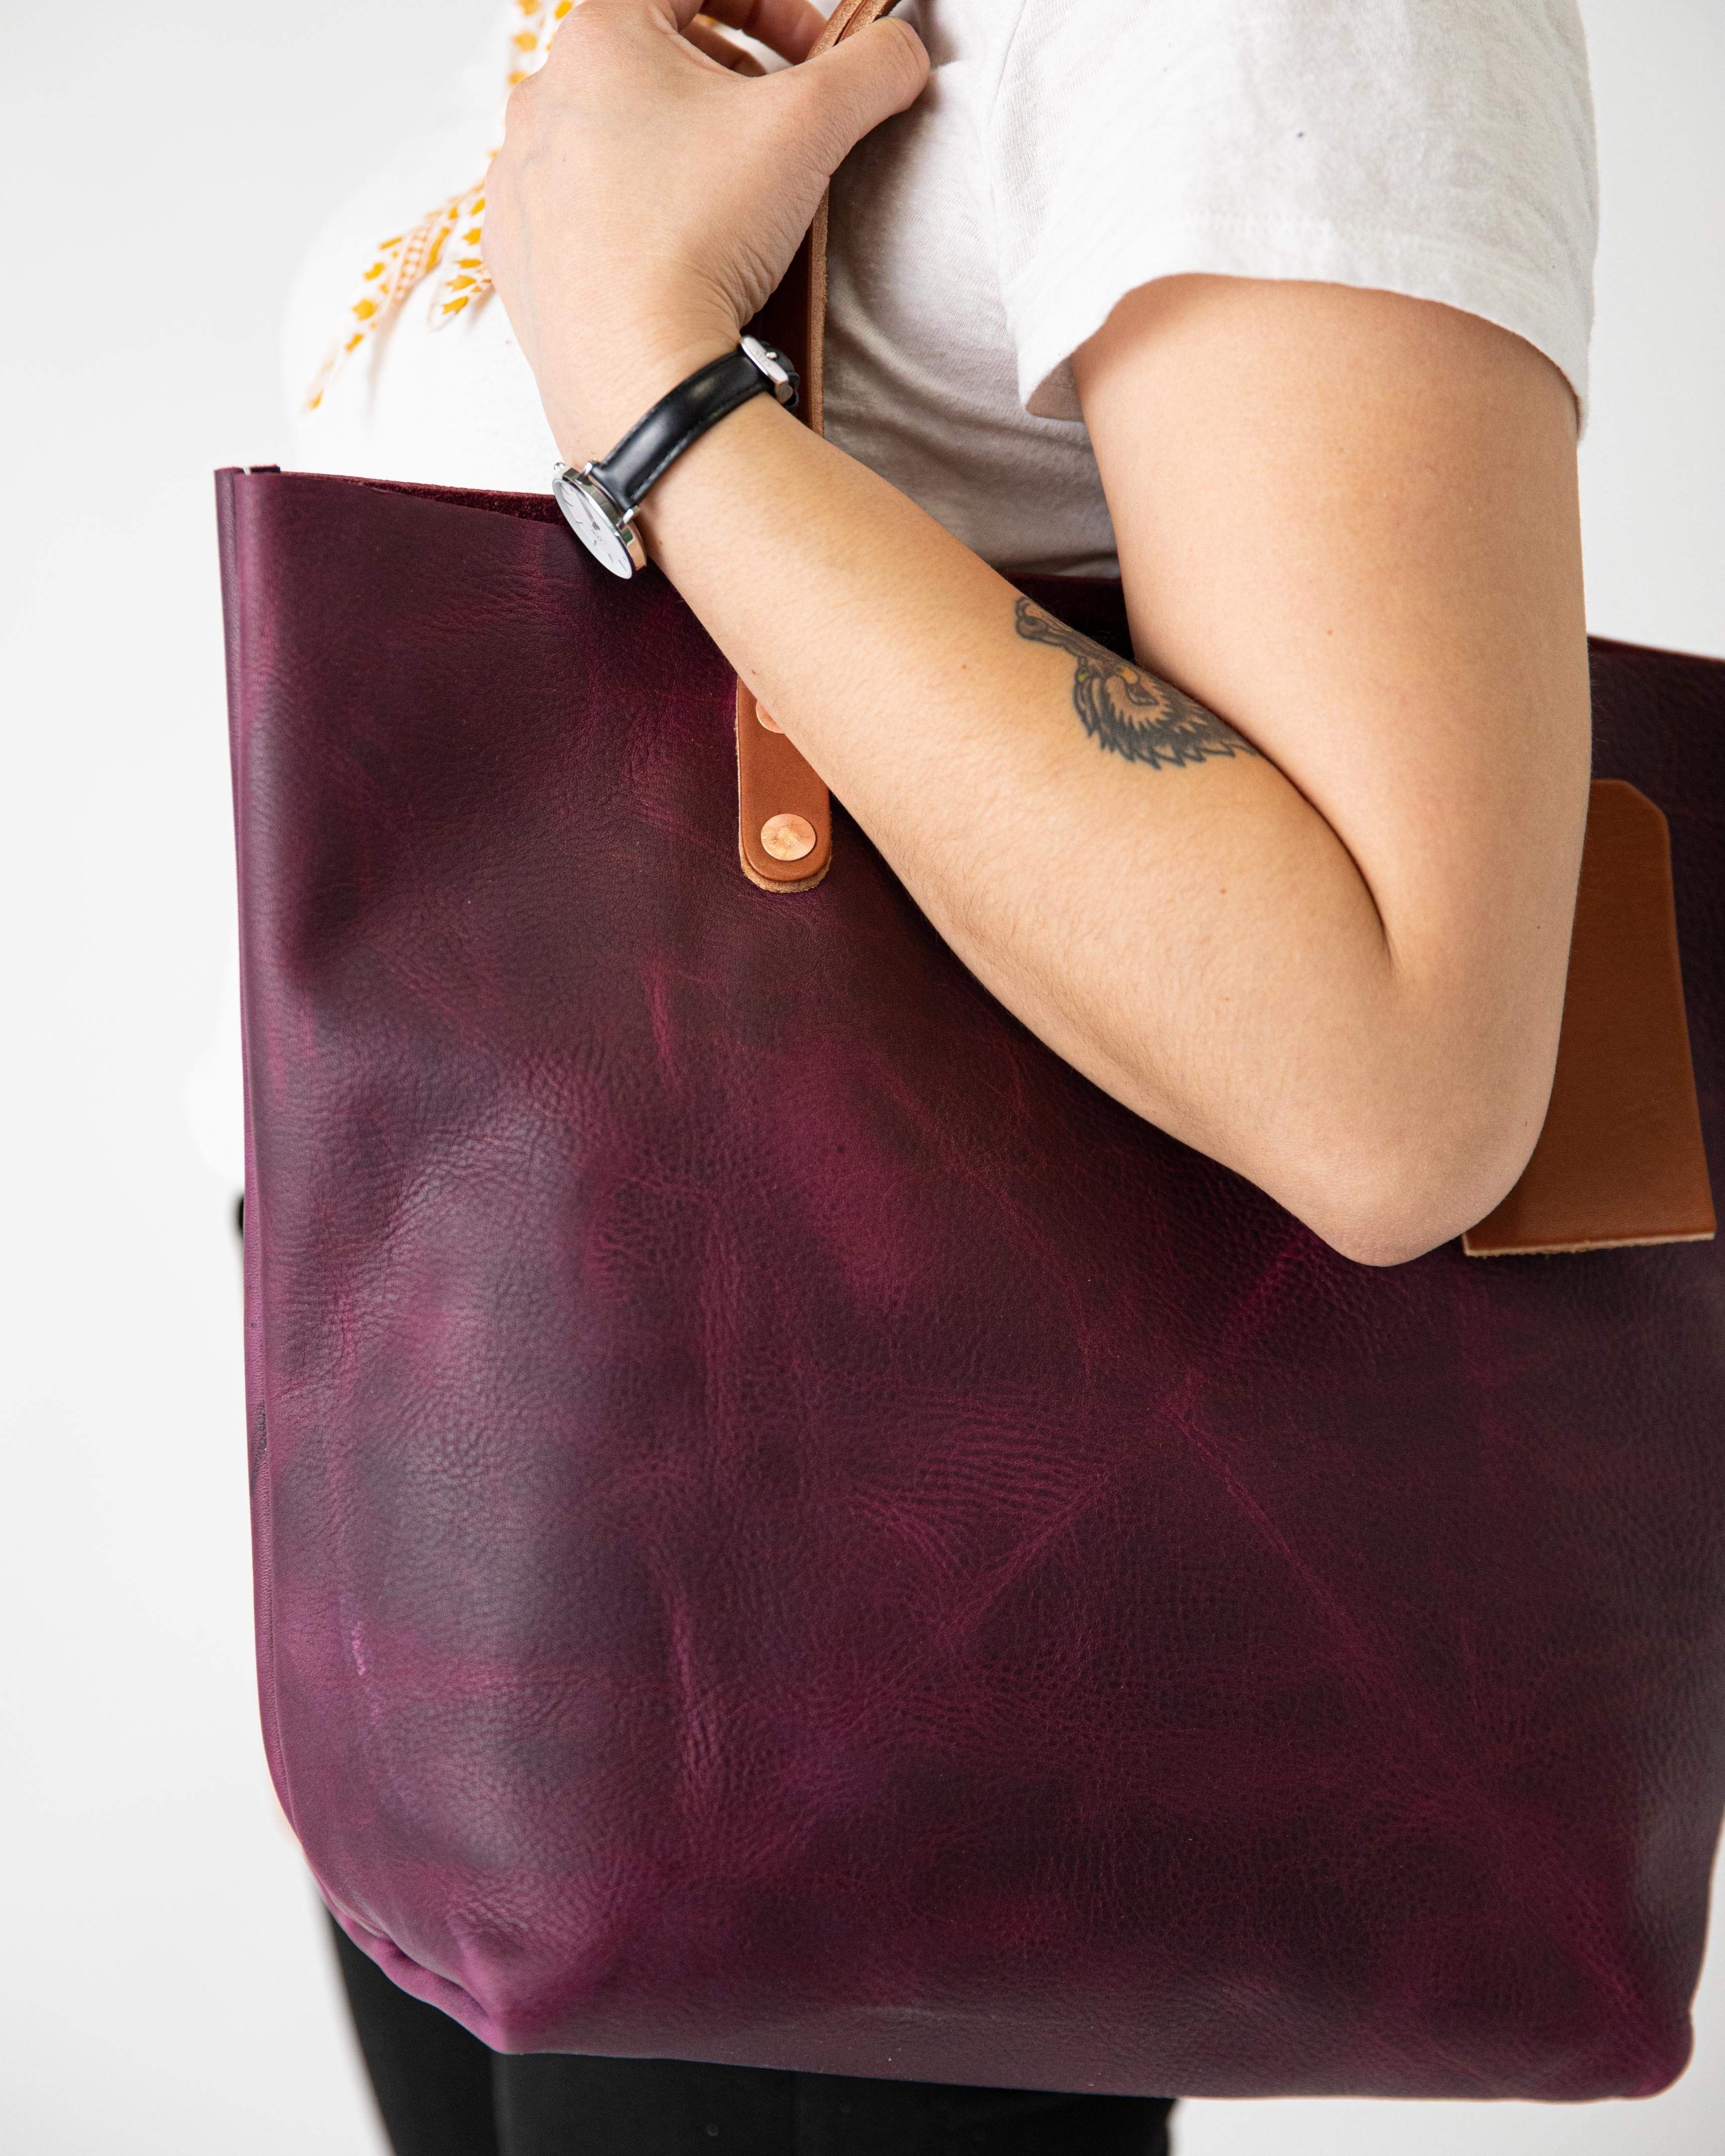 Dooney Bourke Patent Leather Plum Leather purse bag handbag purple | eBay